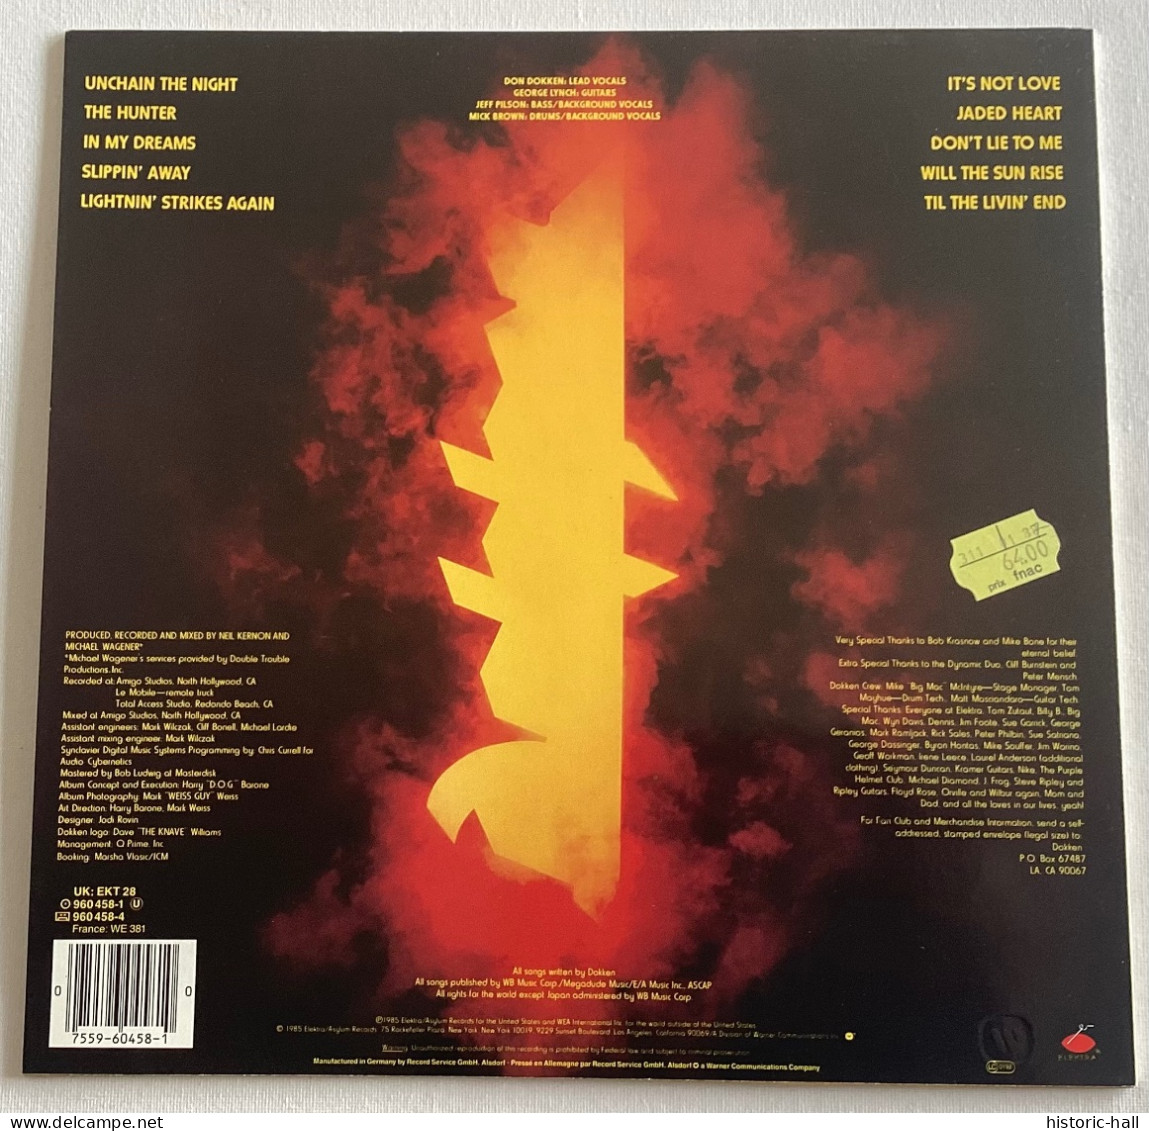 DOKKEN - Under Lock And Key - LP - 1985 - German Press - Hard Rock En Metal